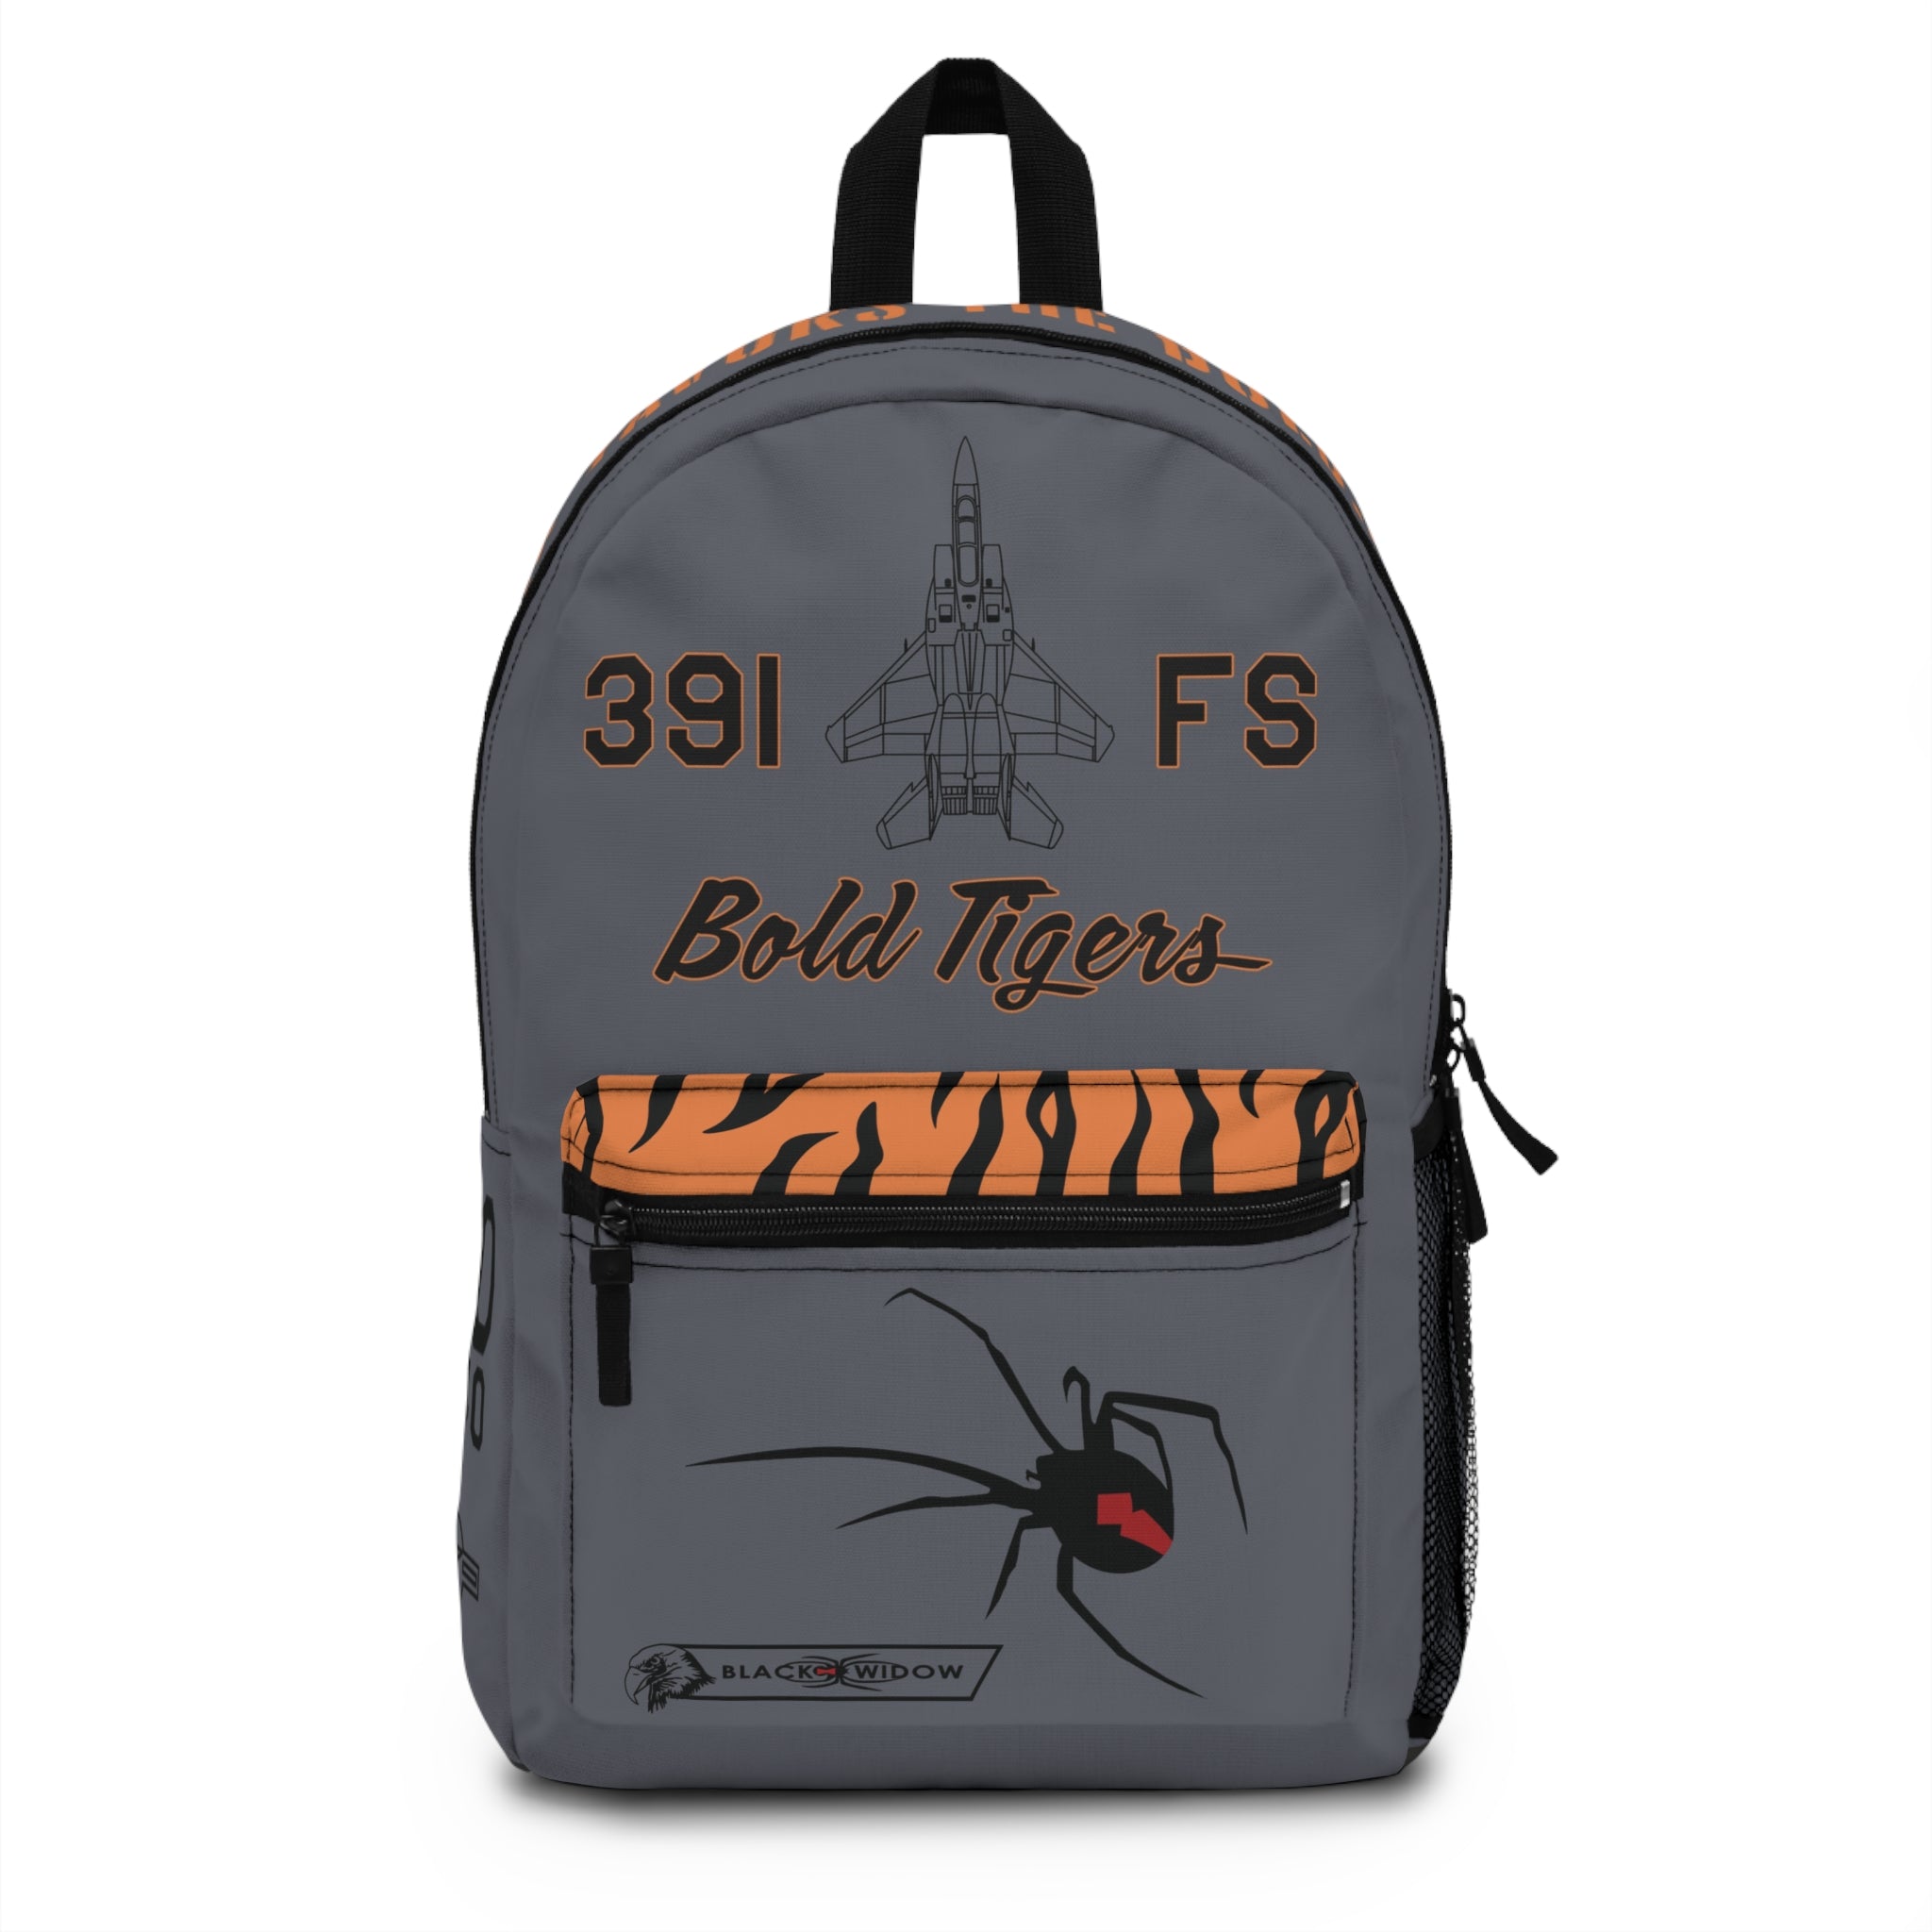 F-15  "Bold Tigers" Backpack - Black Widow Edition - I Love a Hangar